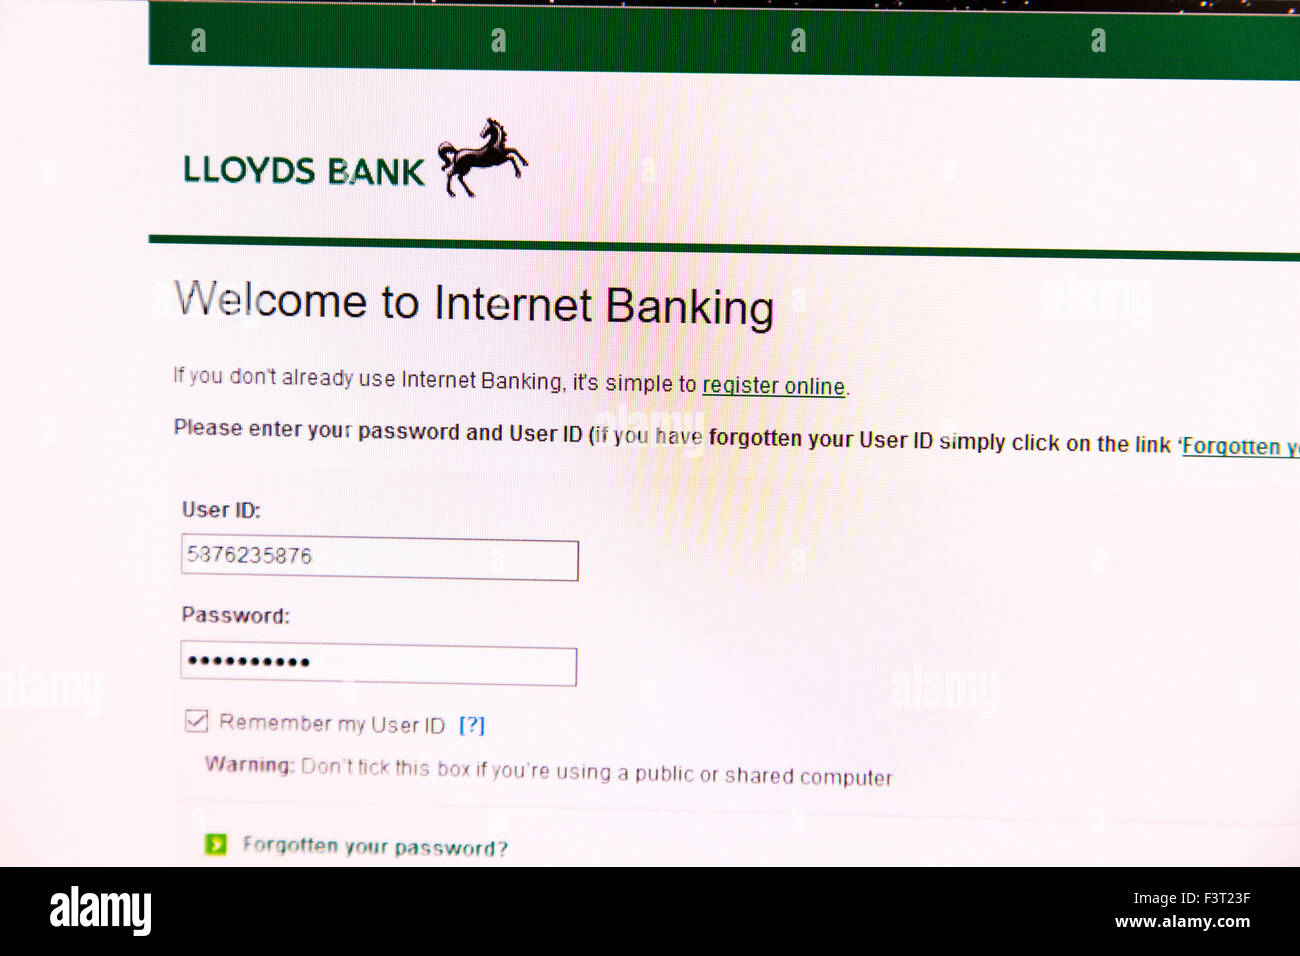 Lloyds Internet Bank